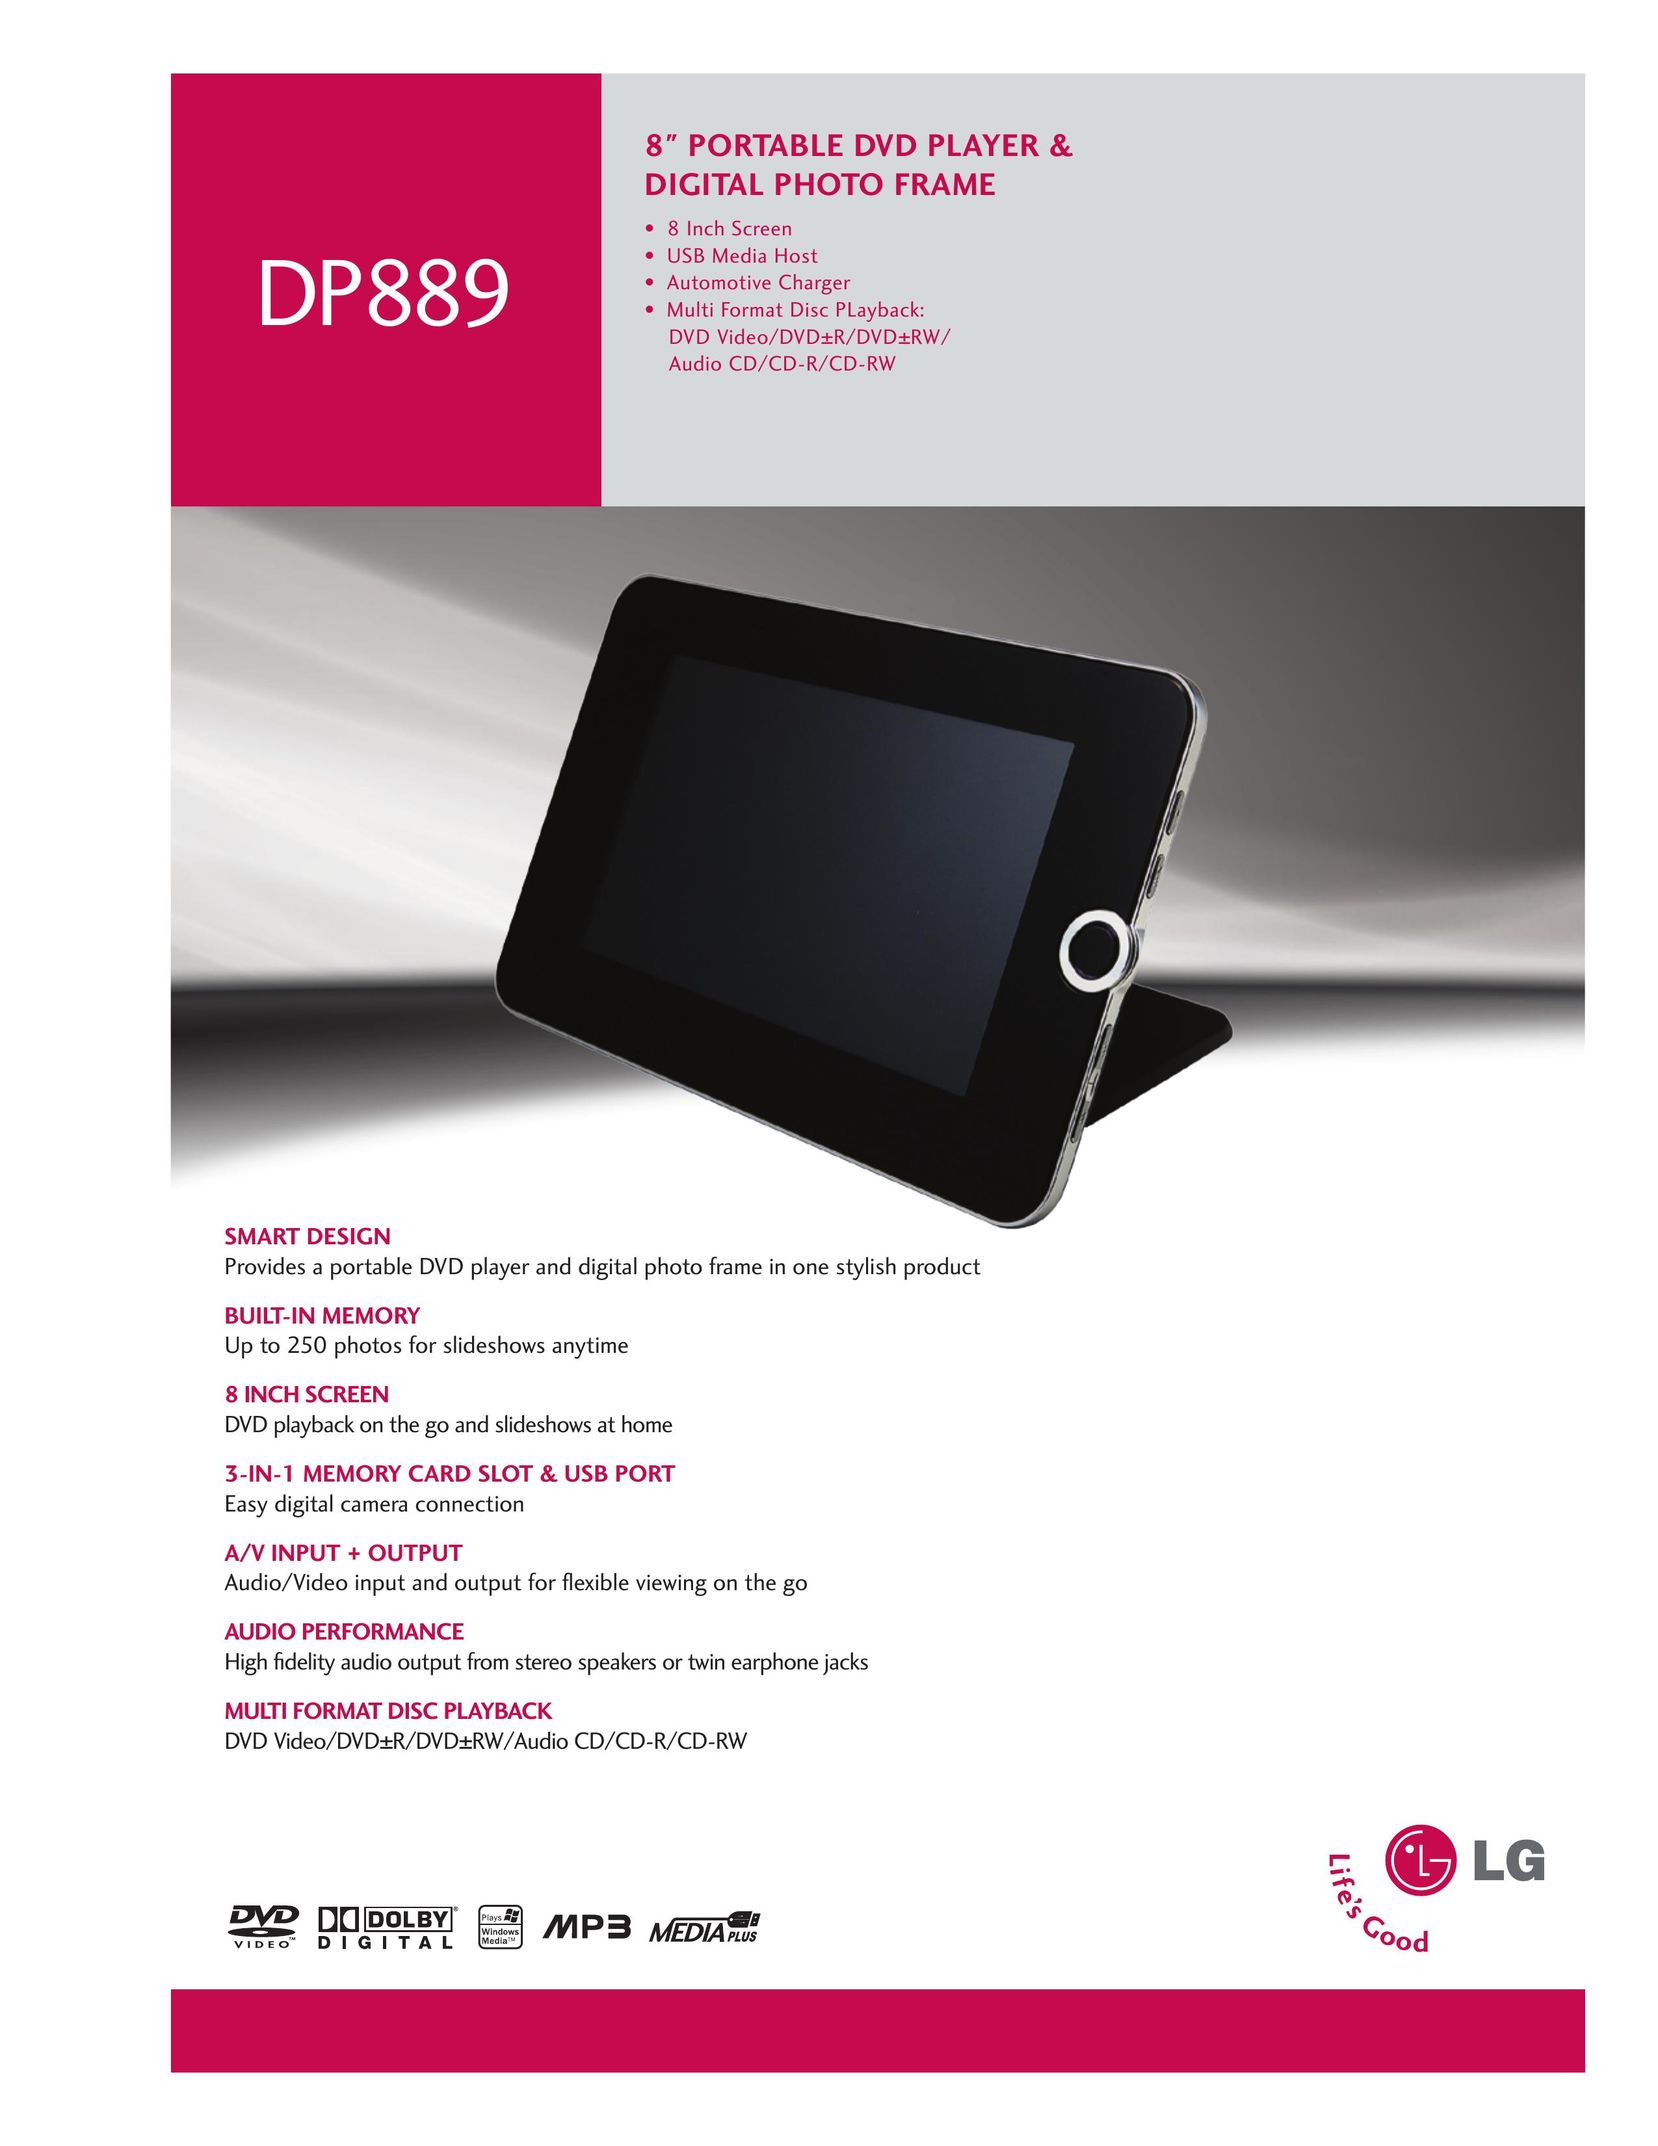 LG Electronics DP889 Portable DVD Player User Manual